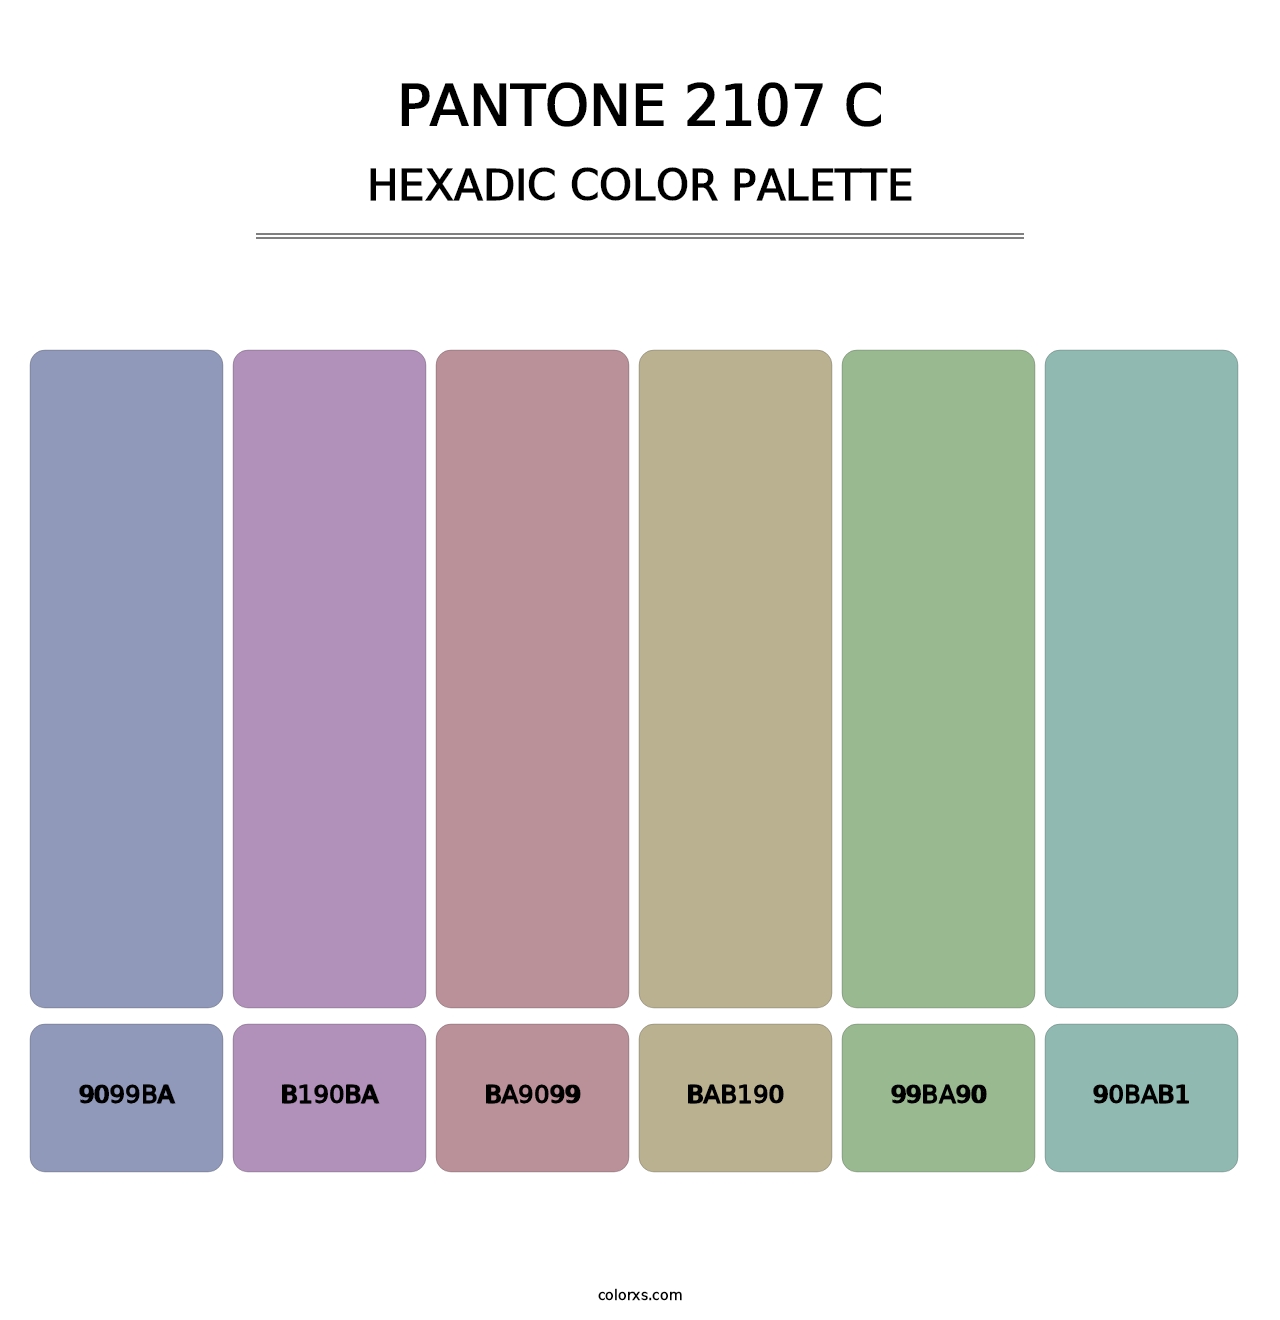 PANTONE 2107 C - Hexadic Color Palette